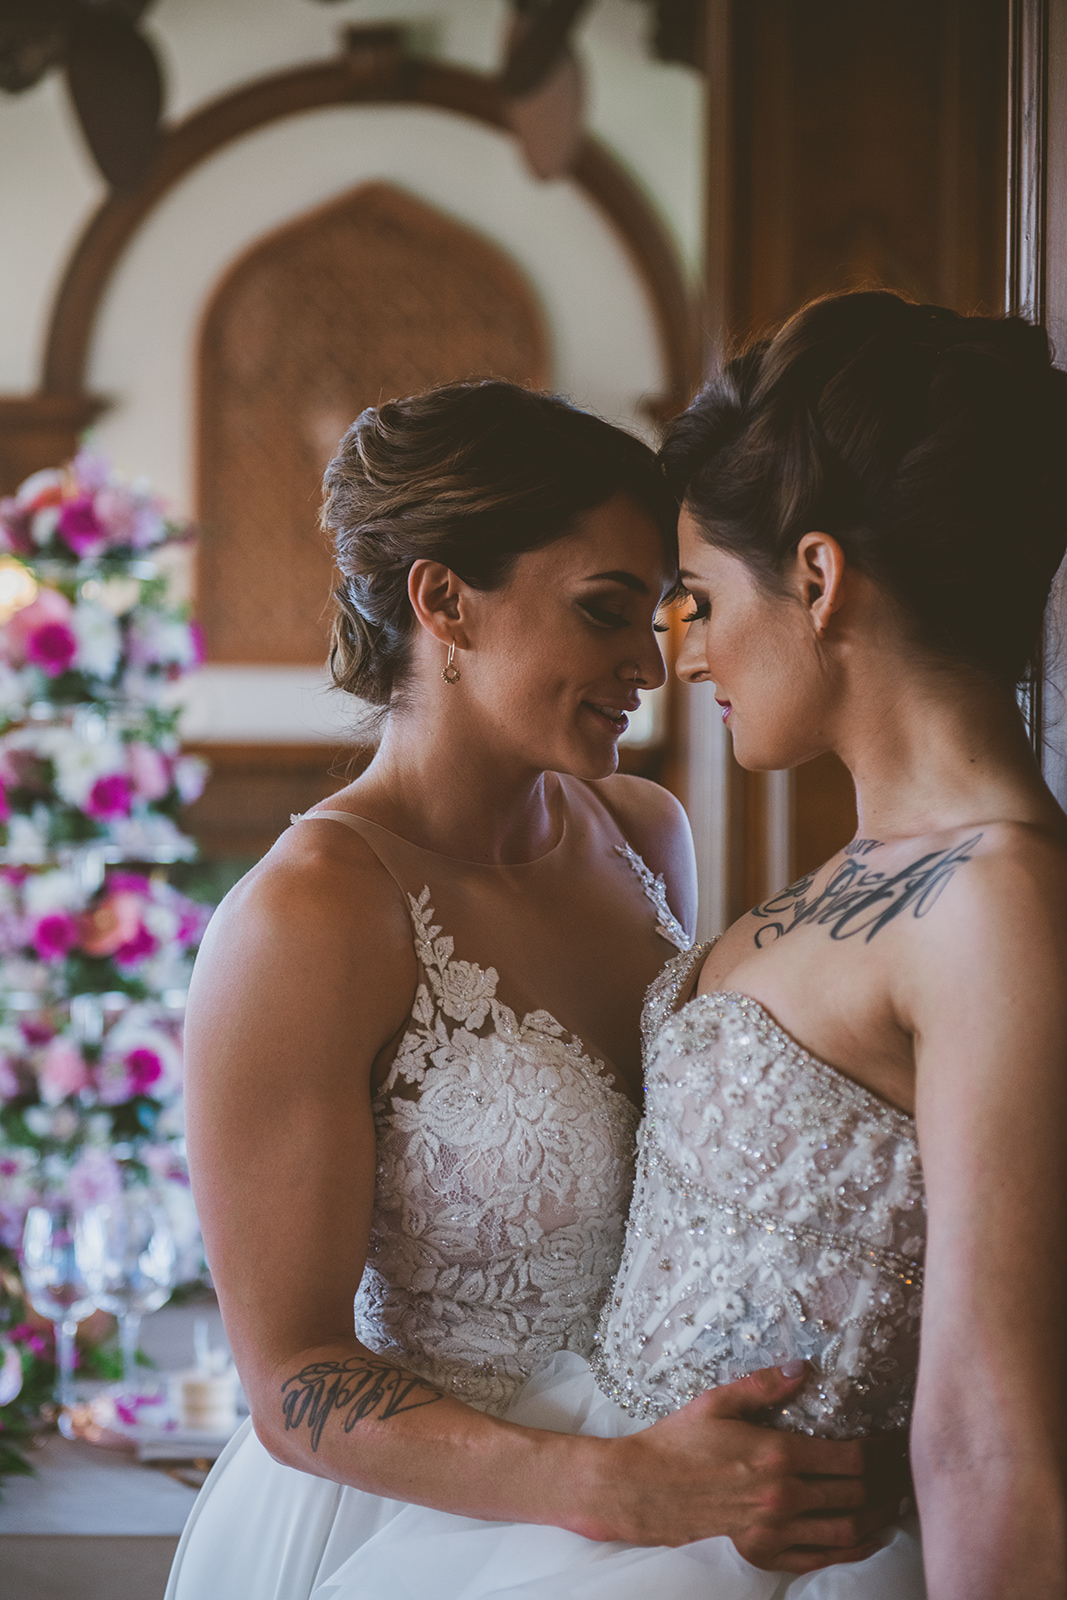 Tropical vintage wedding inspiration in Victoria, British Columbia two brides lesbian wedding tattoos tulle white wedding dress